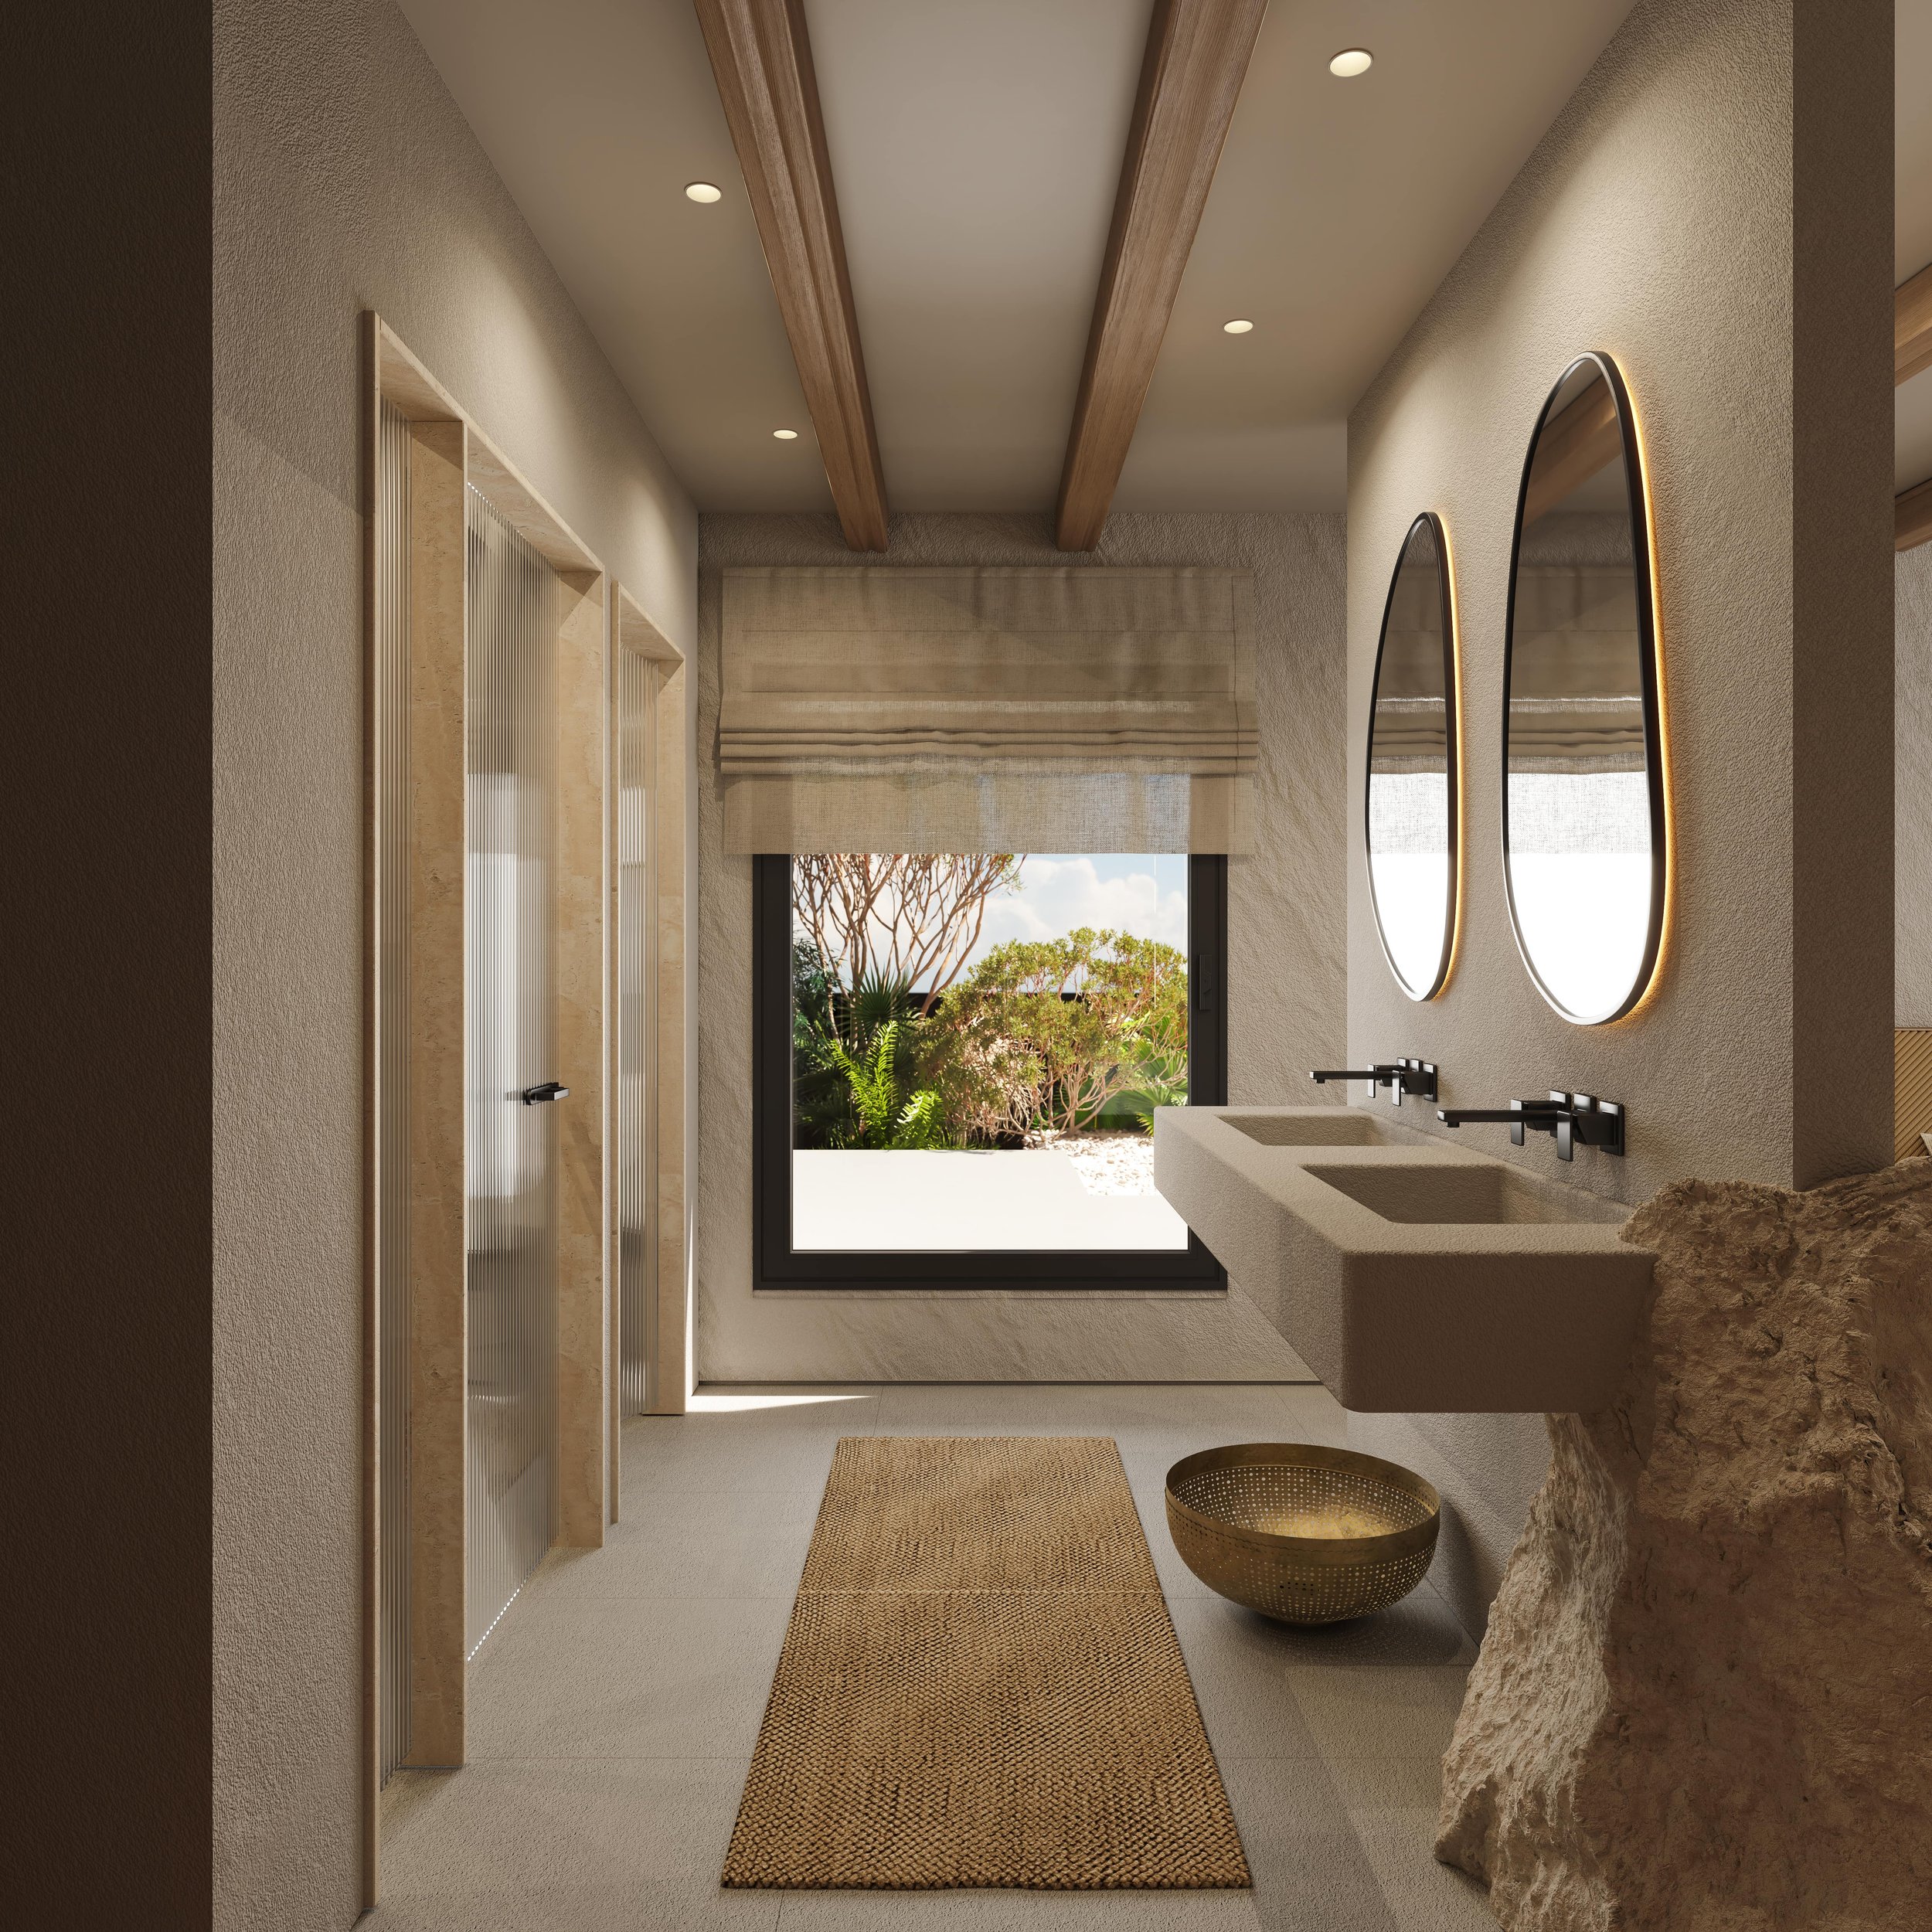 2 Bedrooms villa for sale at mazeej residence soma Bay- Bathroom-min.jpg